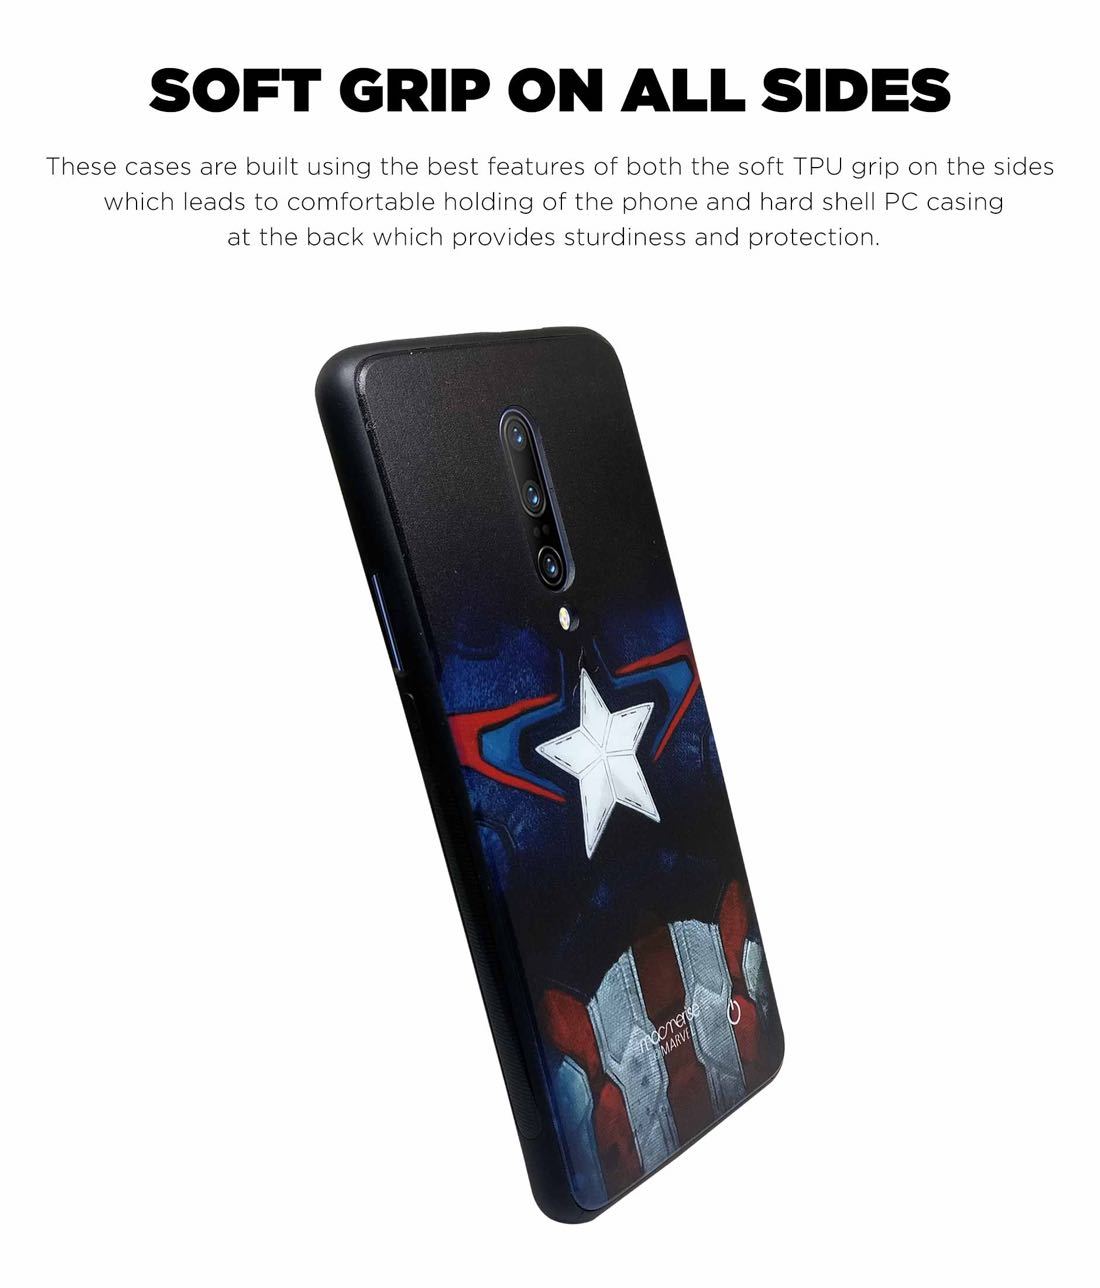 Cap Am Suit - Lumous LED Phone Case for OnePlus 7 Pro